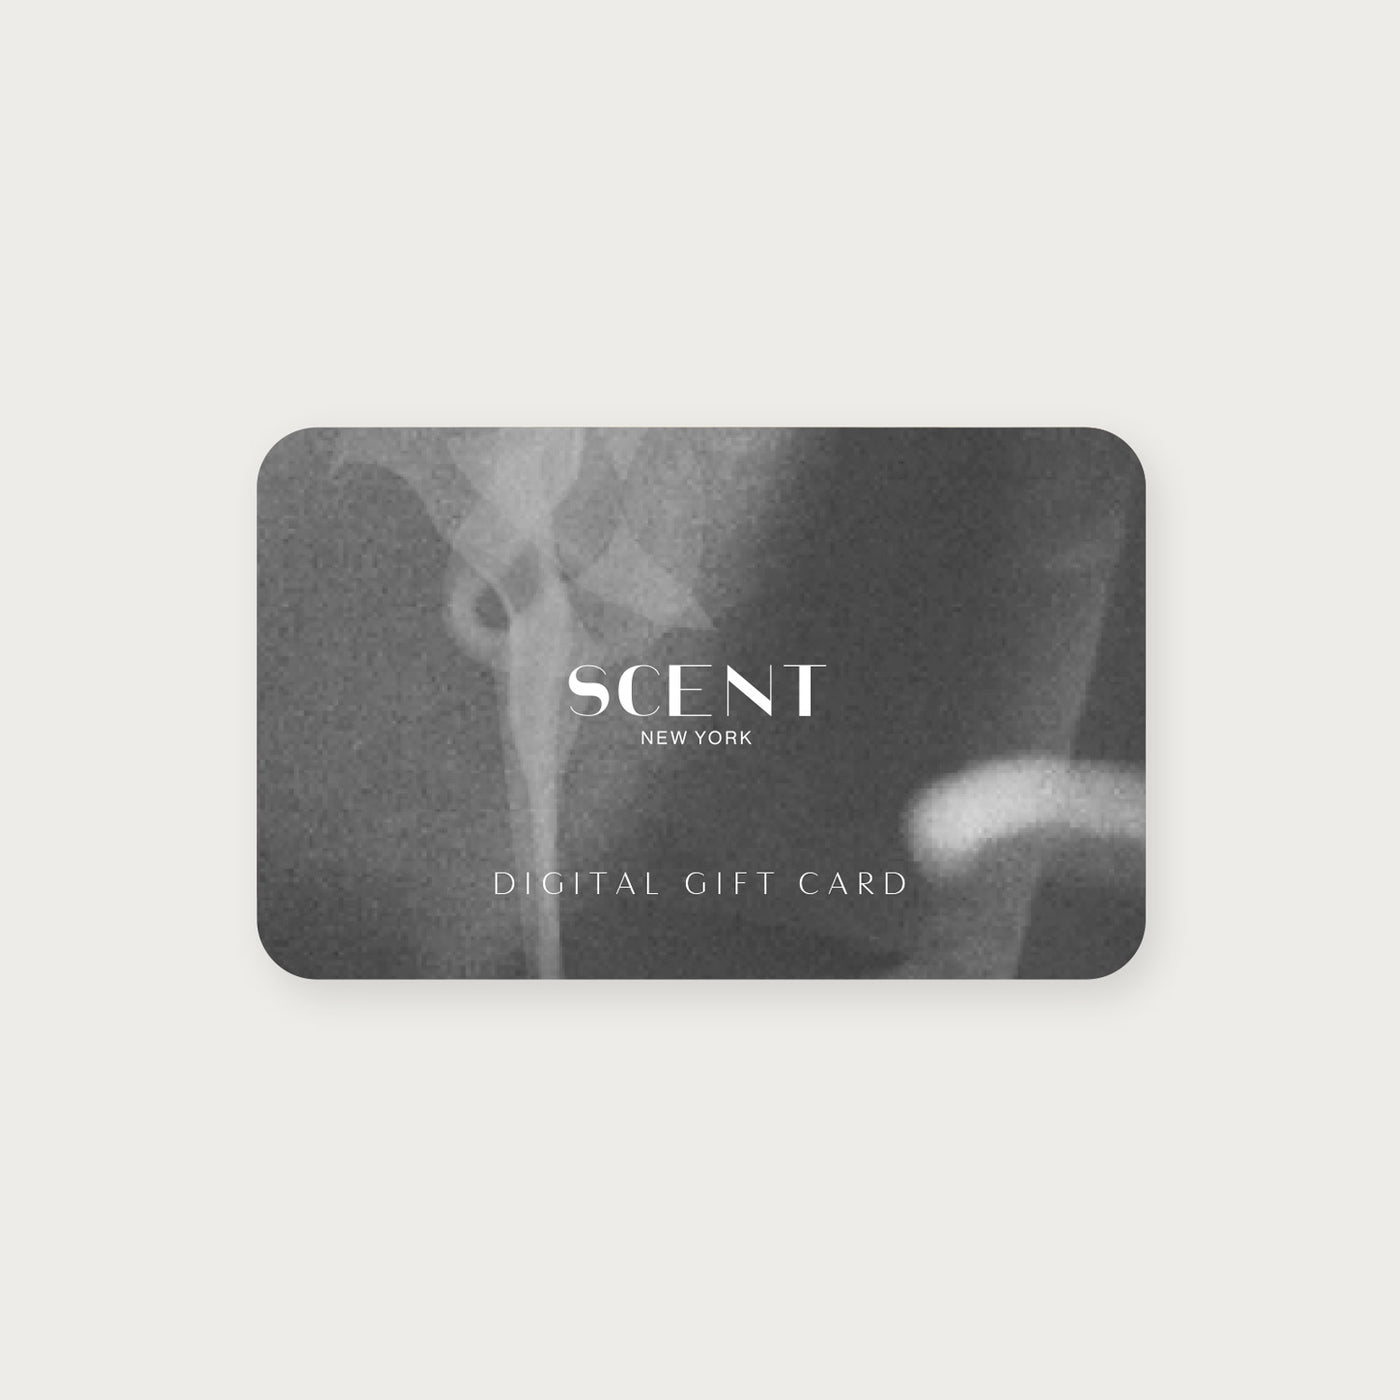 Scent New York Digital Gift Card